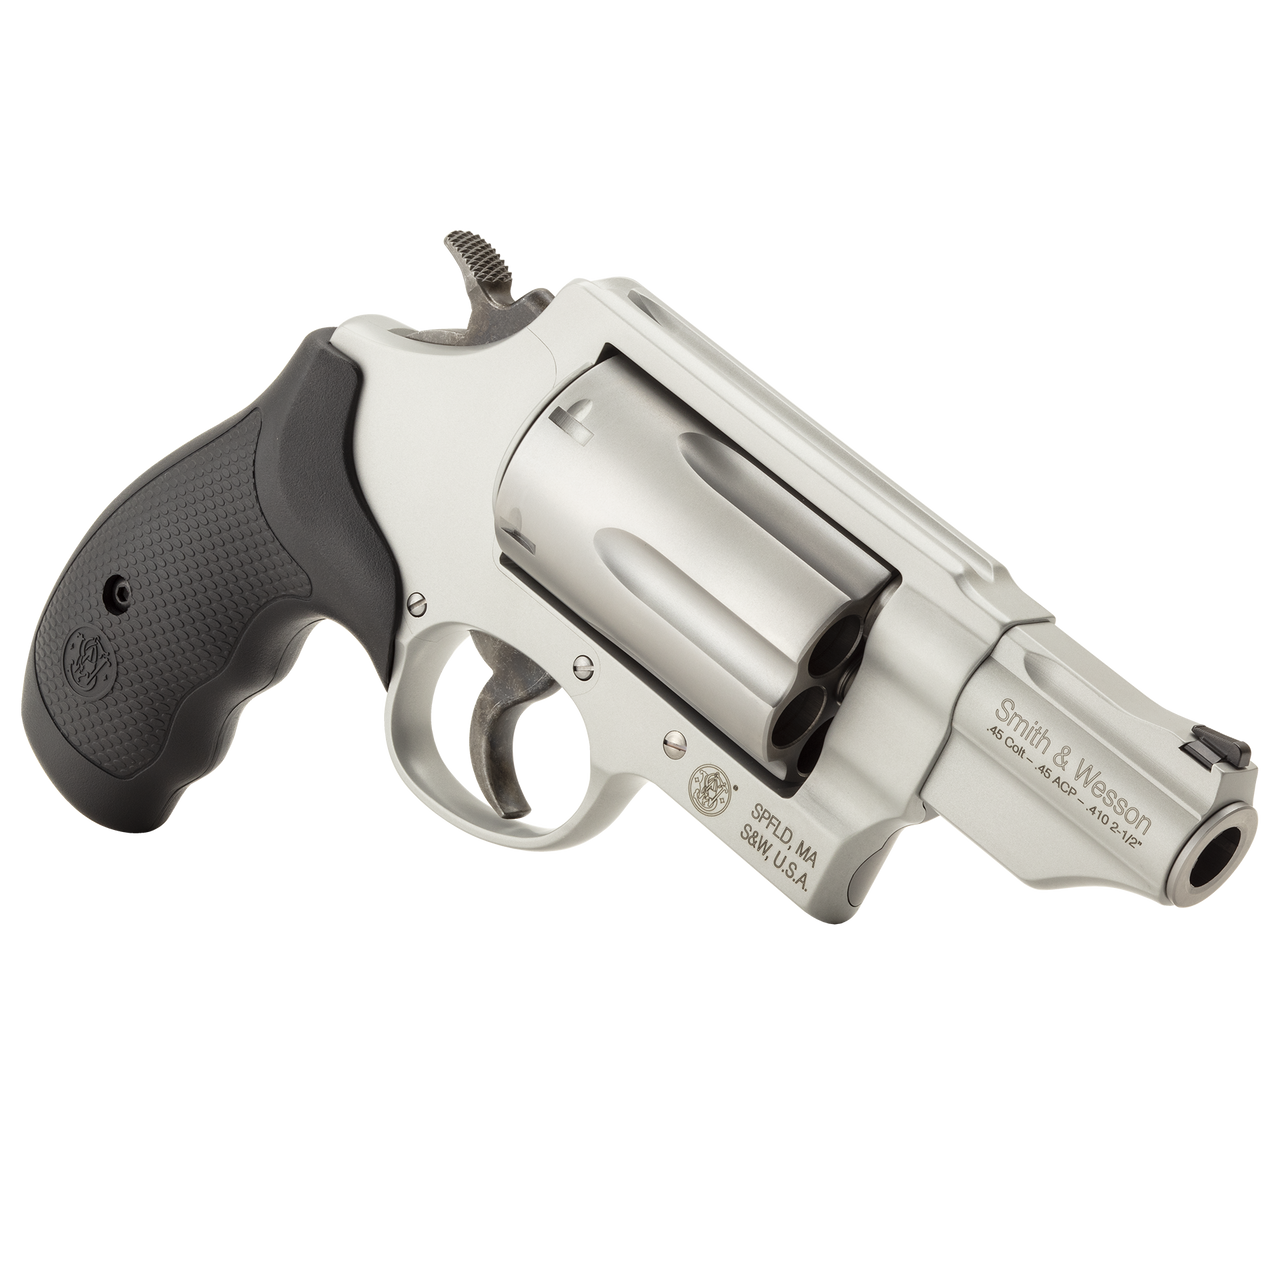 Smith & Wesson Governor 410 SHOTSHELL, 45 COLT, 45ACP Silver Revolver